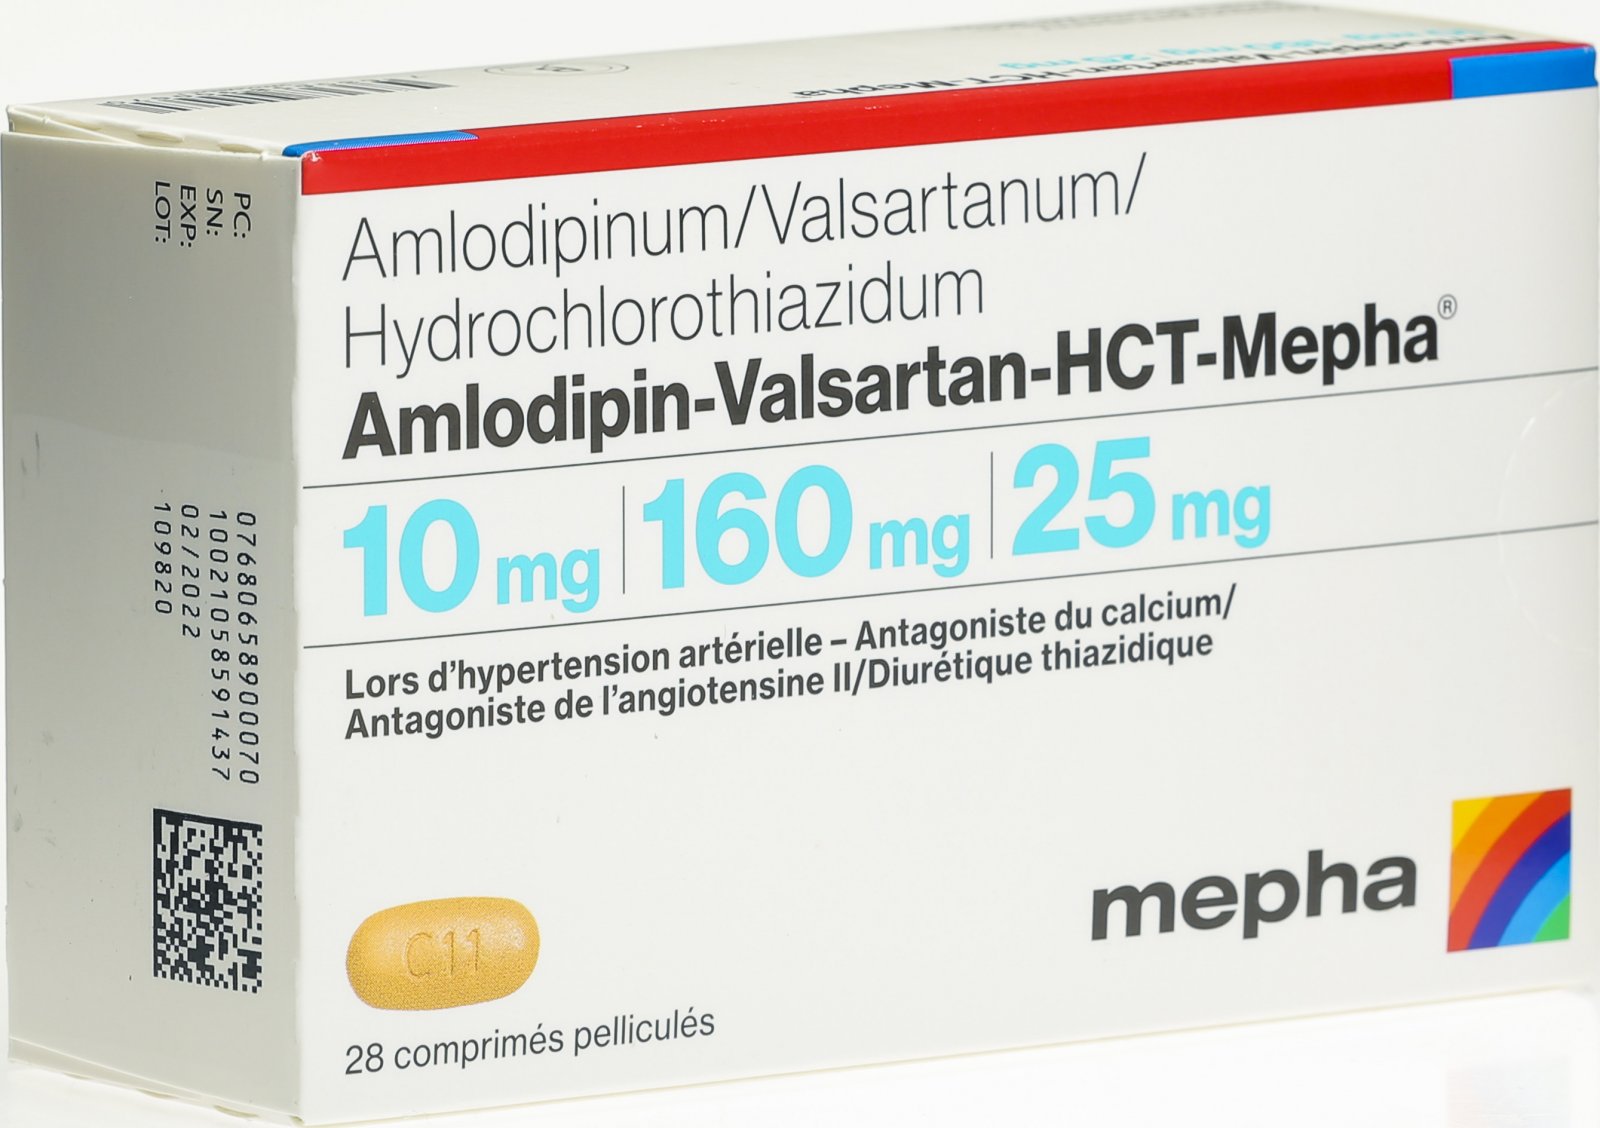 valsartan hctz 160-25 mg recall